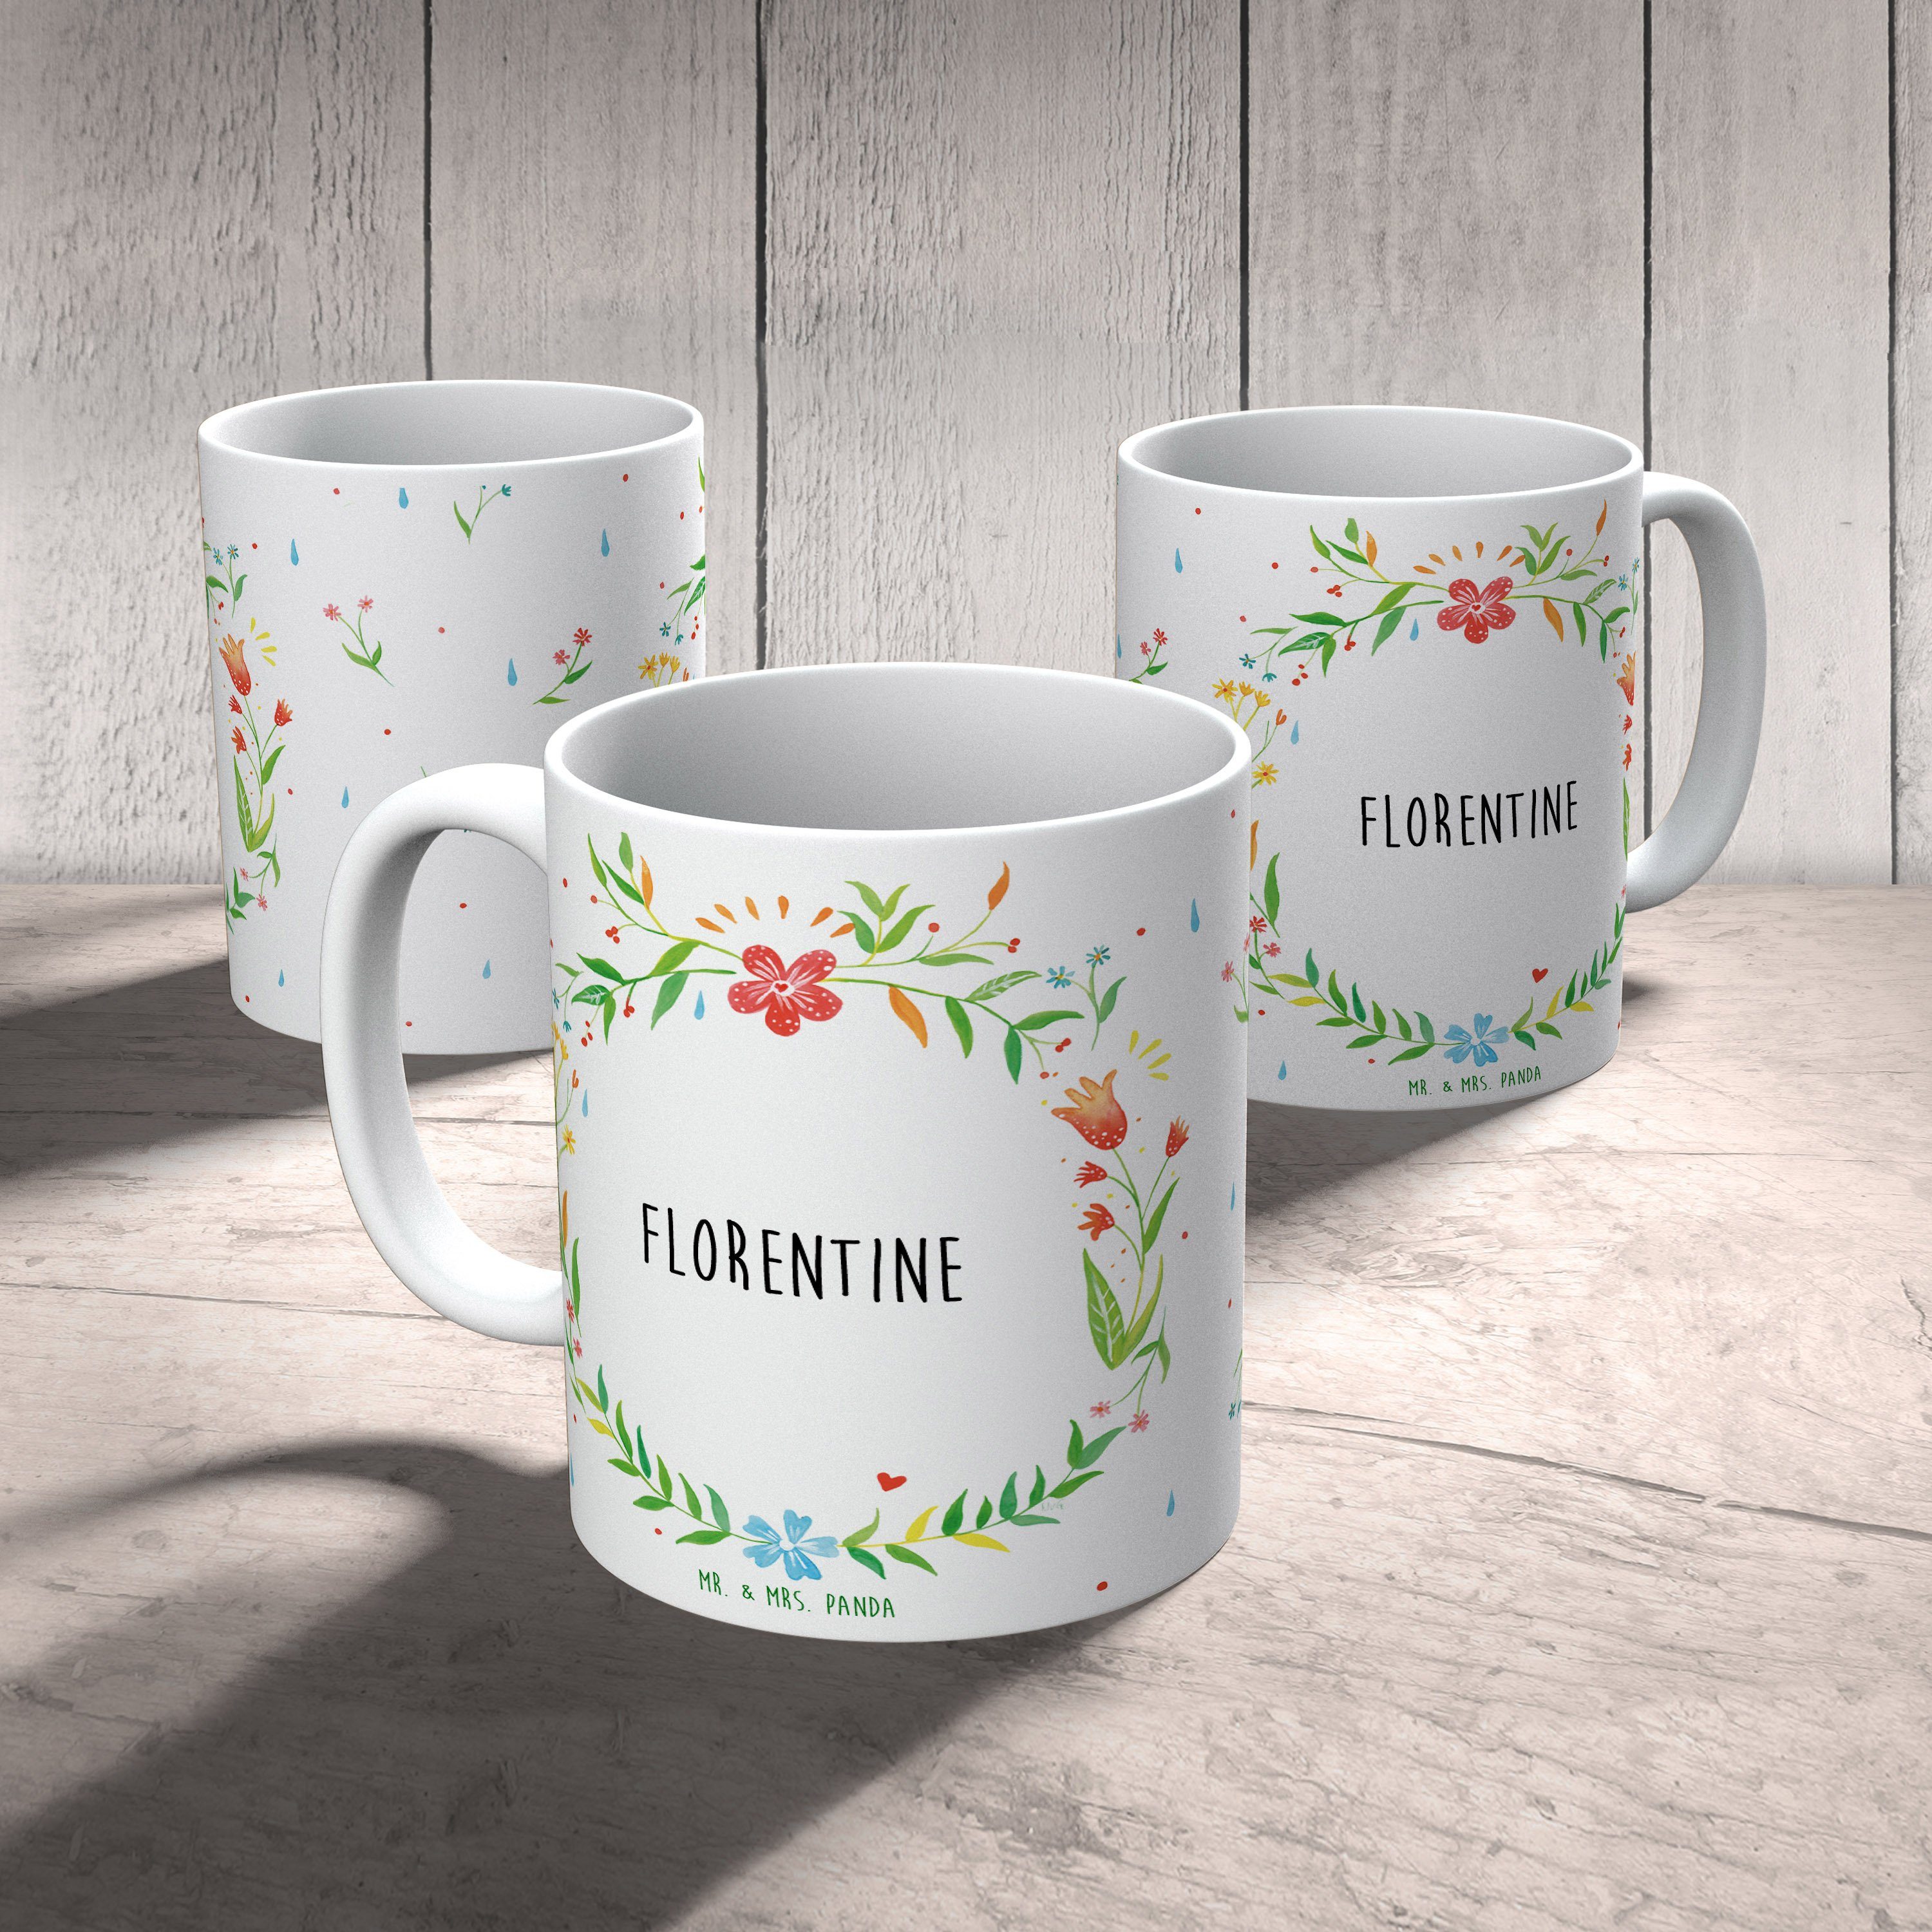 Mr. & Mrs. Panda Florentine - Tasse, Geschenk, Keramik Tasse Teetasse, Porzellantasse, Kaffeebecher